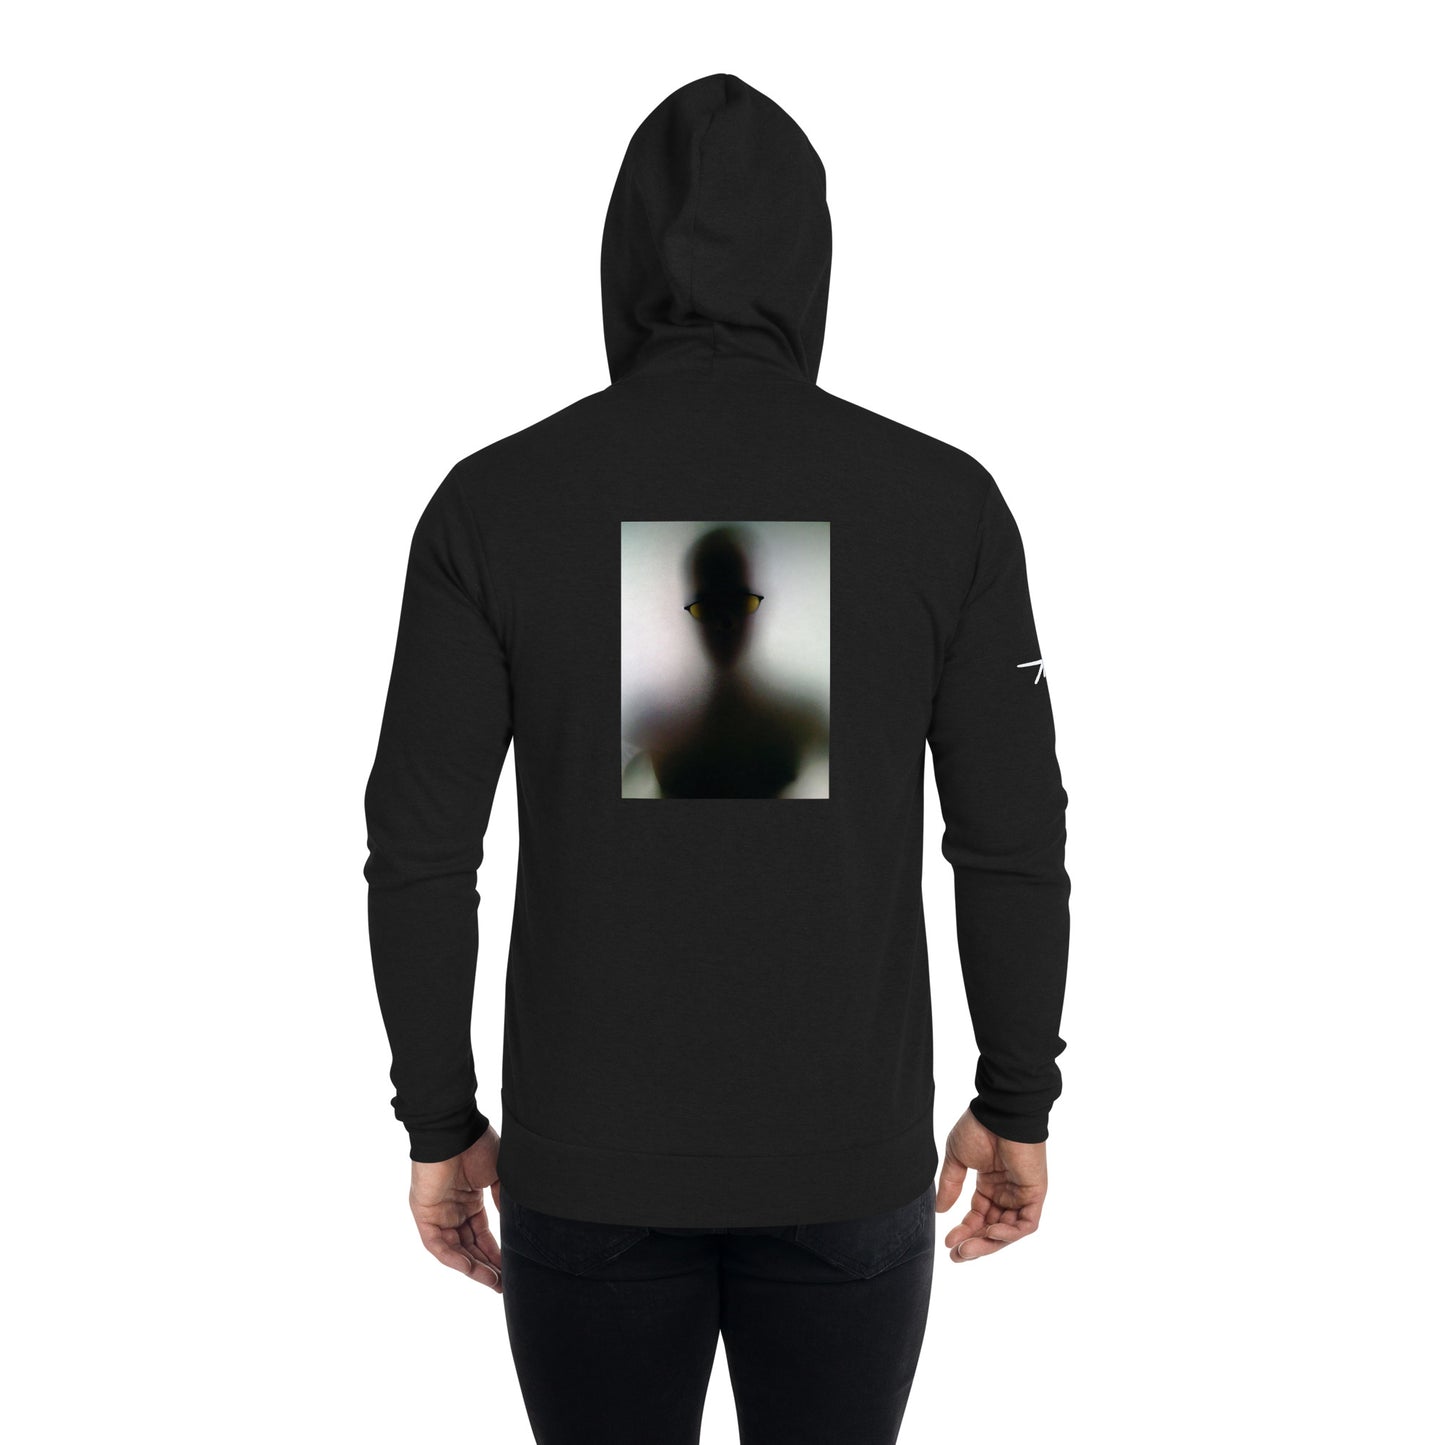 Alienation of tm Unisex ZIP hoodie